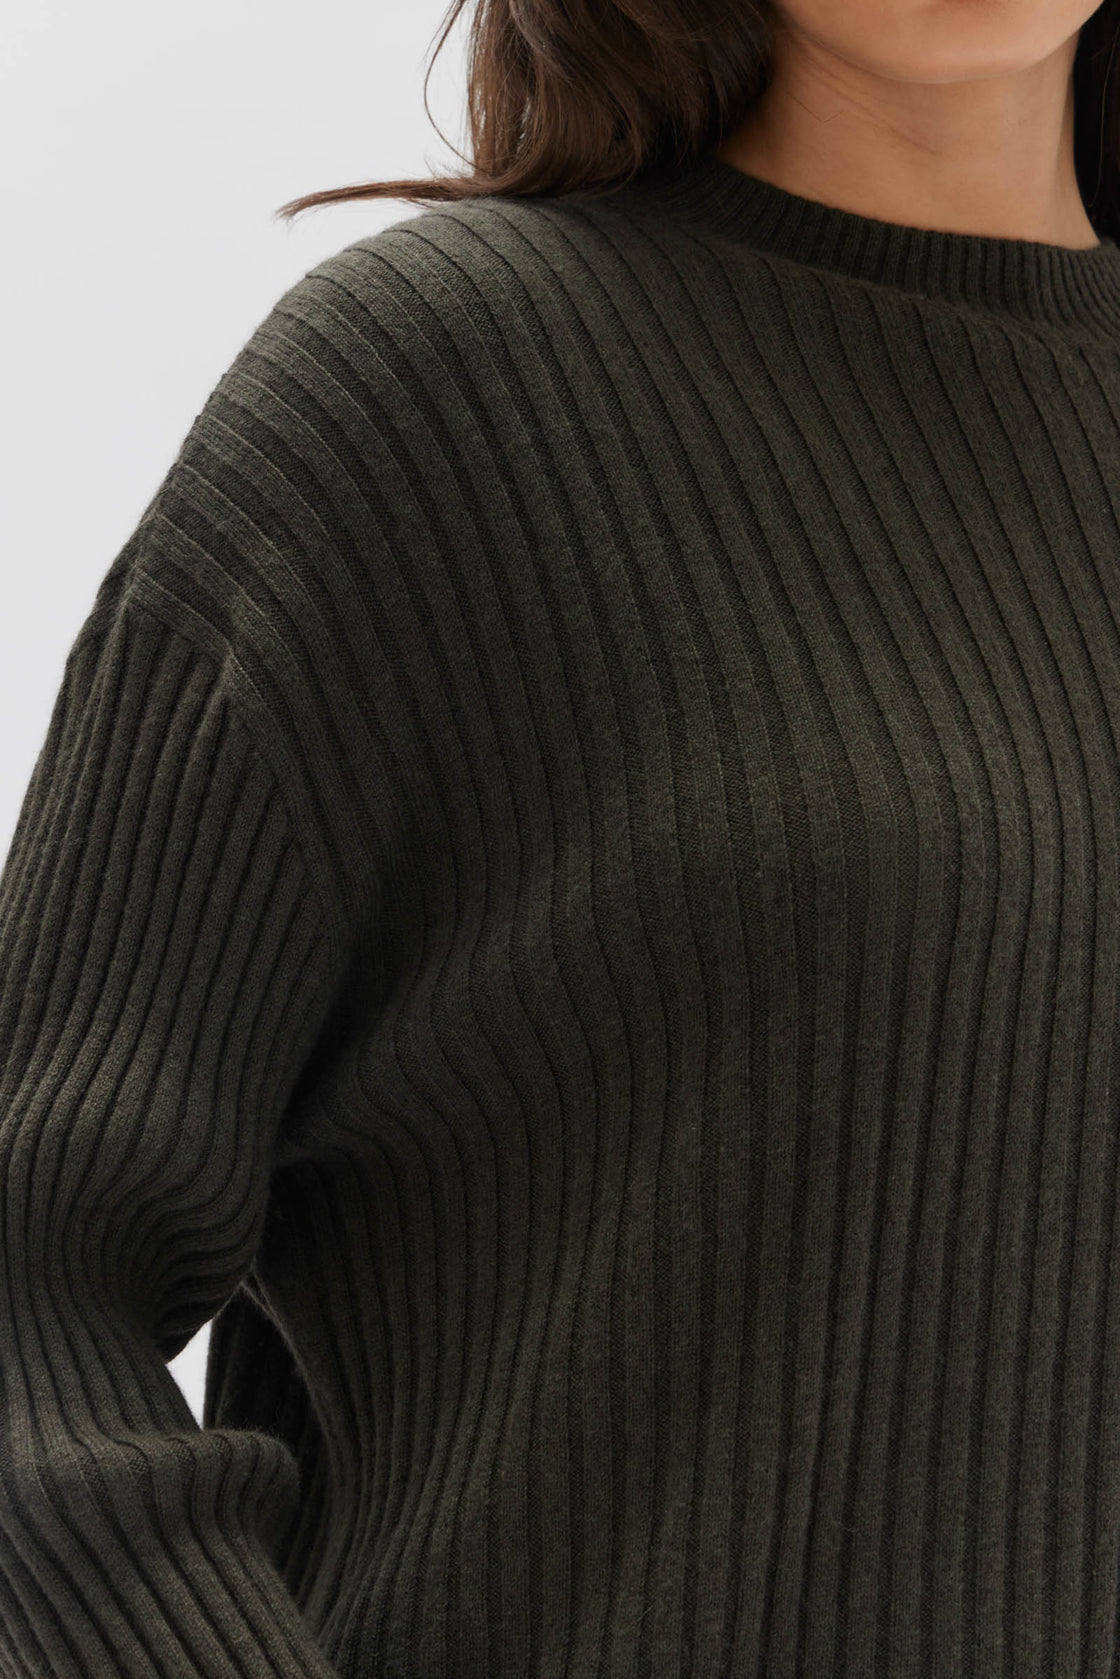 Wool Cashmere Rib Long Sleeve Top - Clove